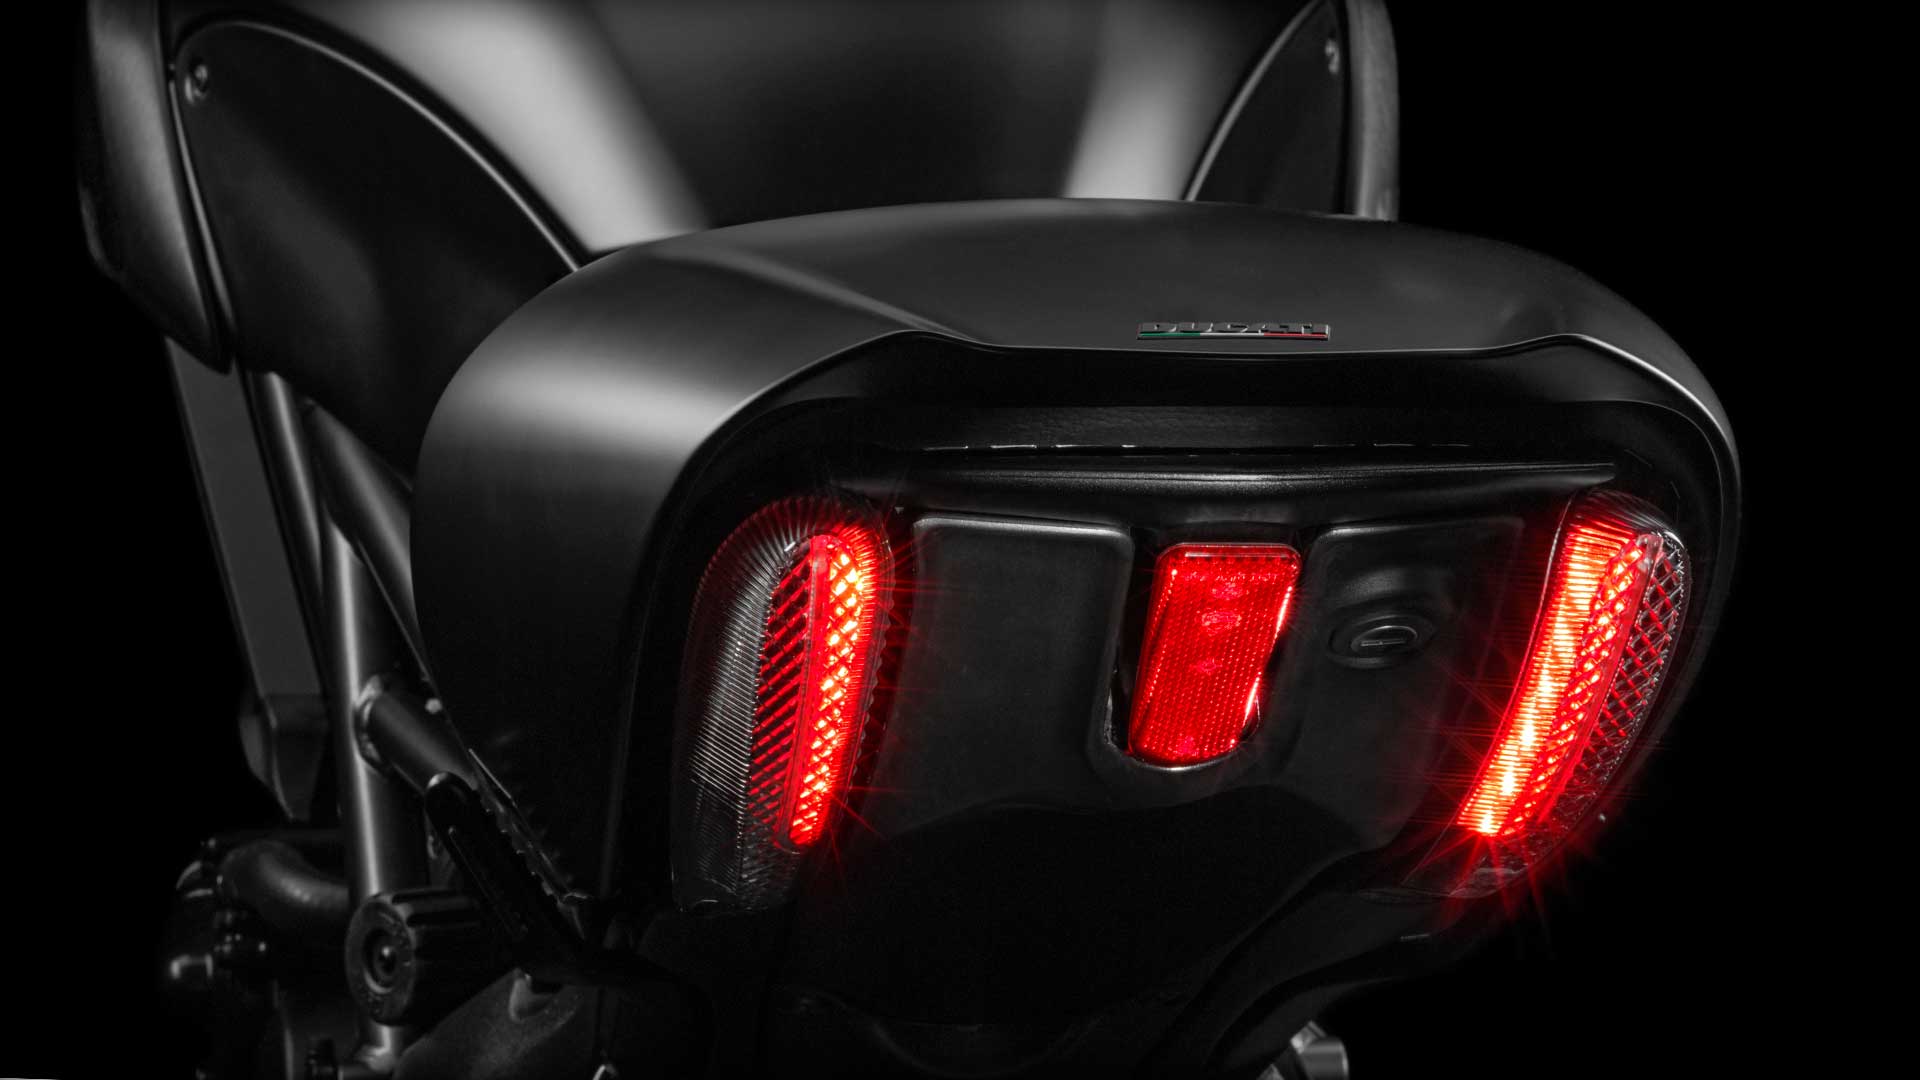 Ducati Diavel exterior rear light